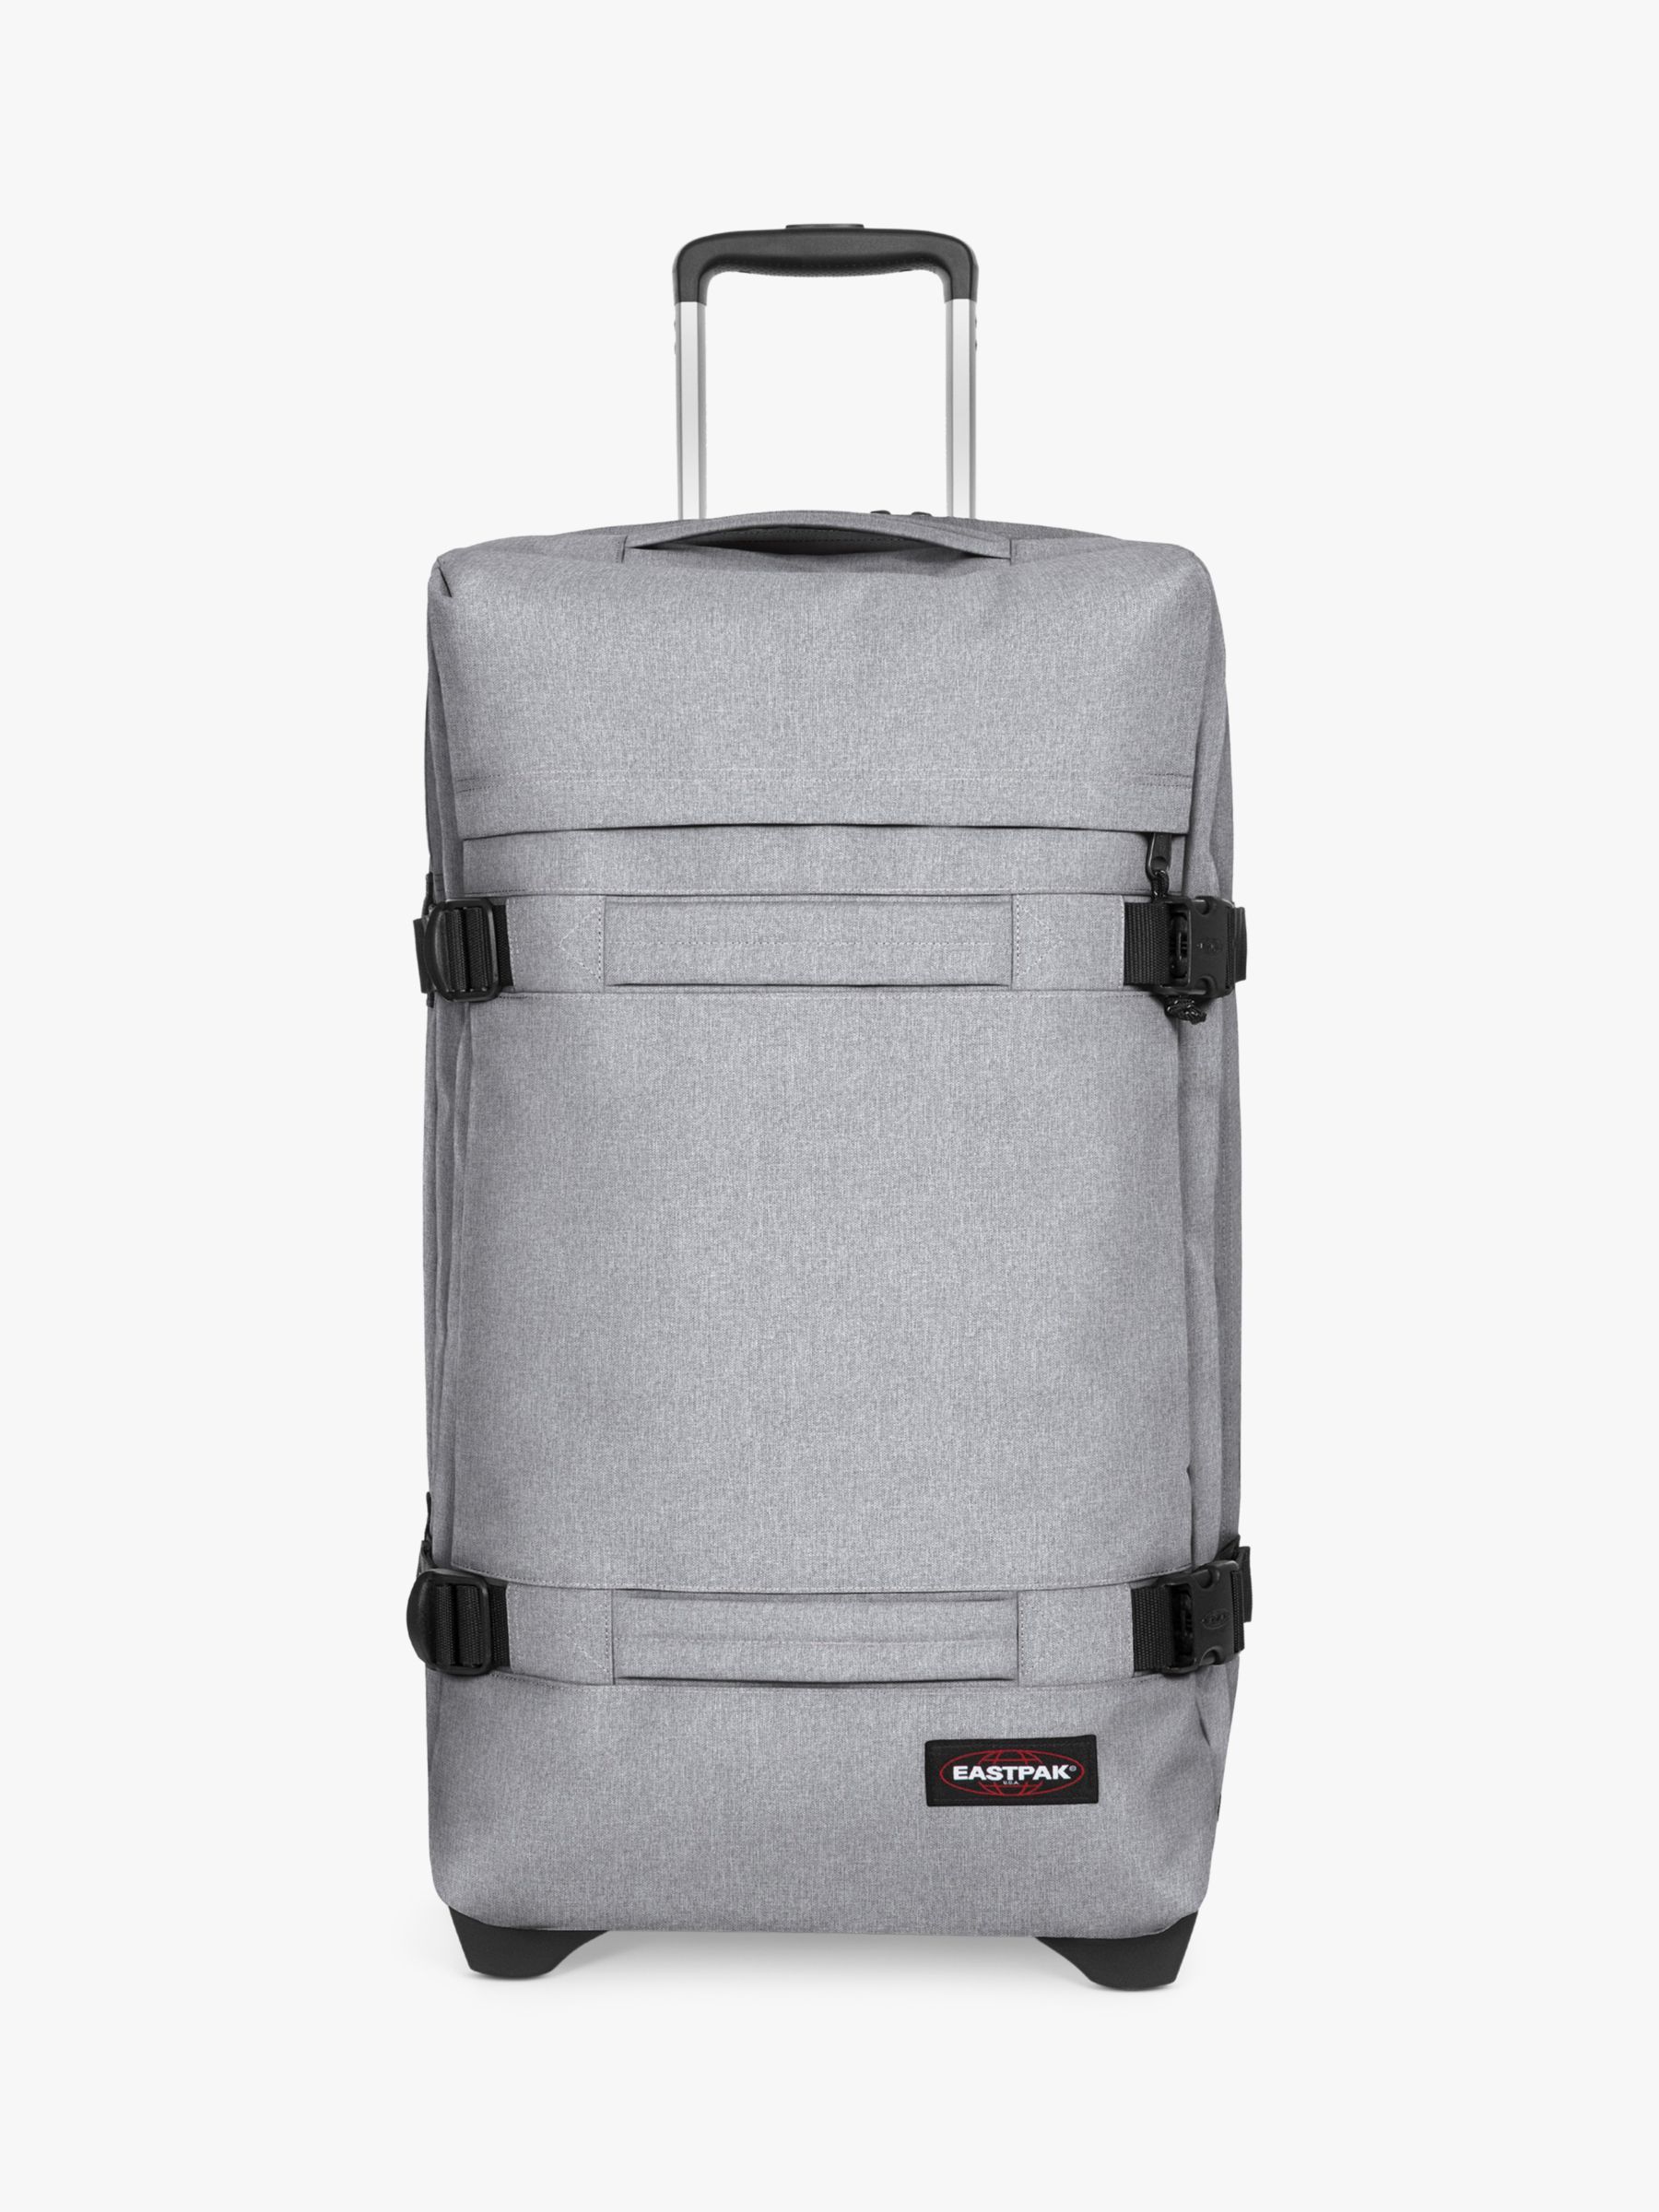 Eastpak Tranverz S Lilac Luggage, Compare